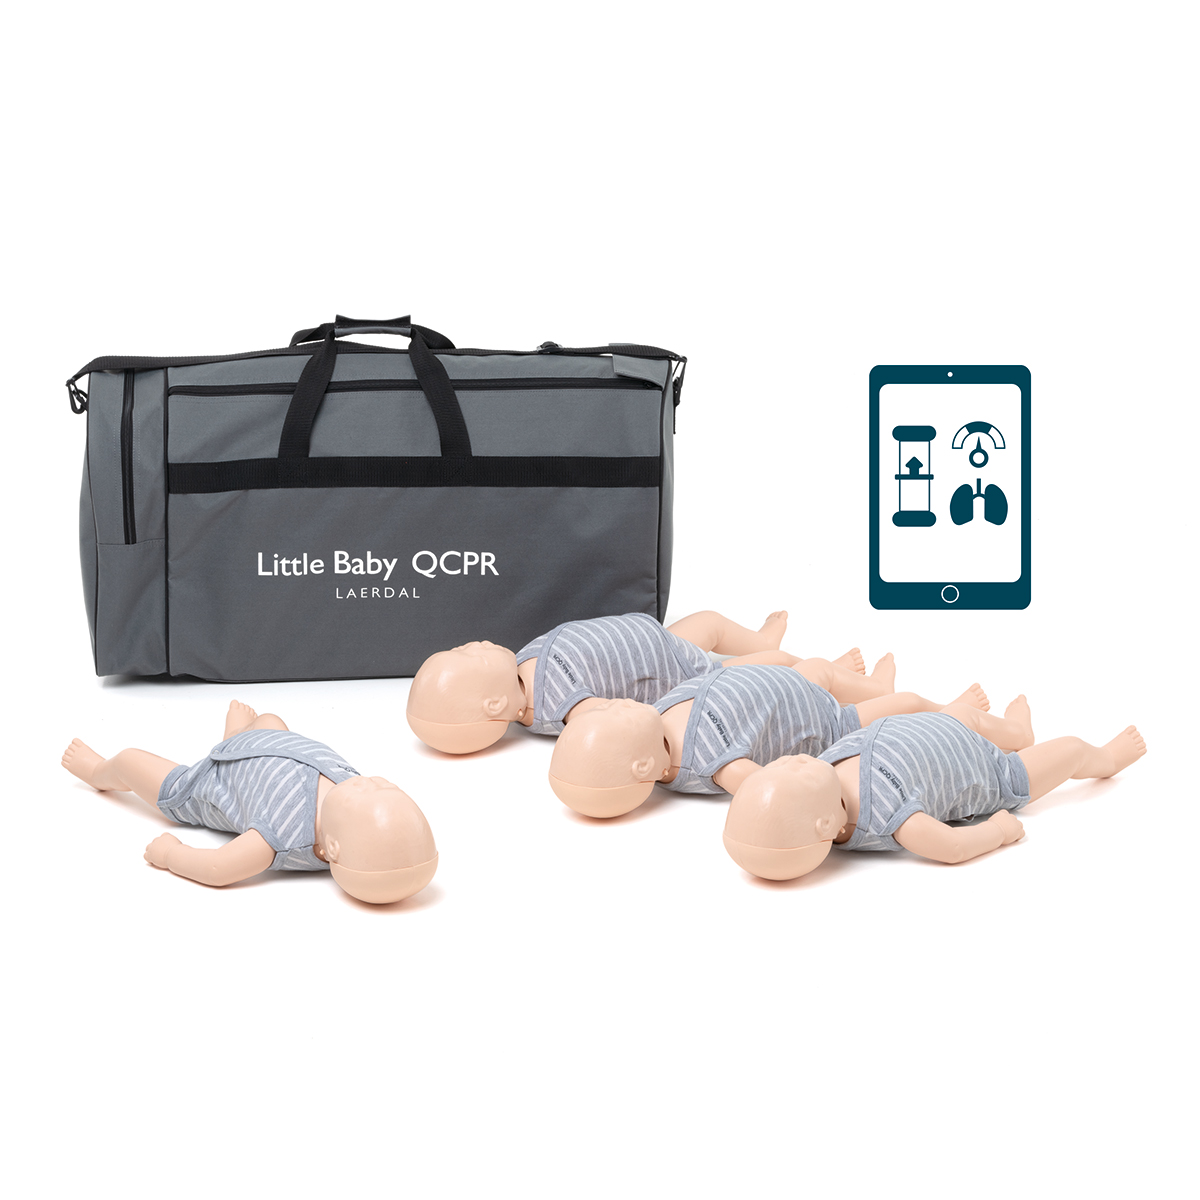 Pack of 4 Laerdal Little Baby QCPR Light Skin Training Manikins